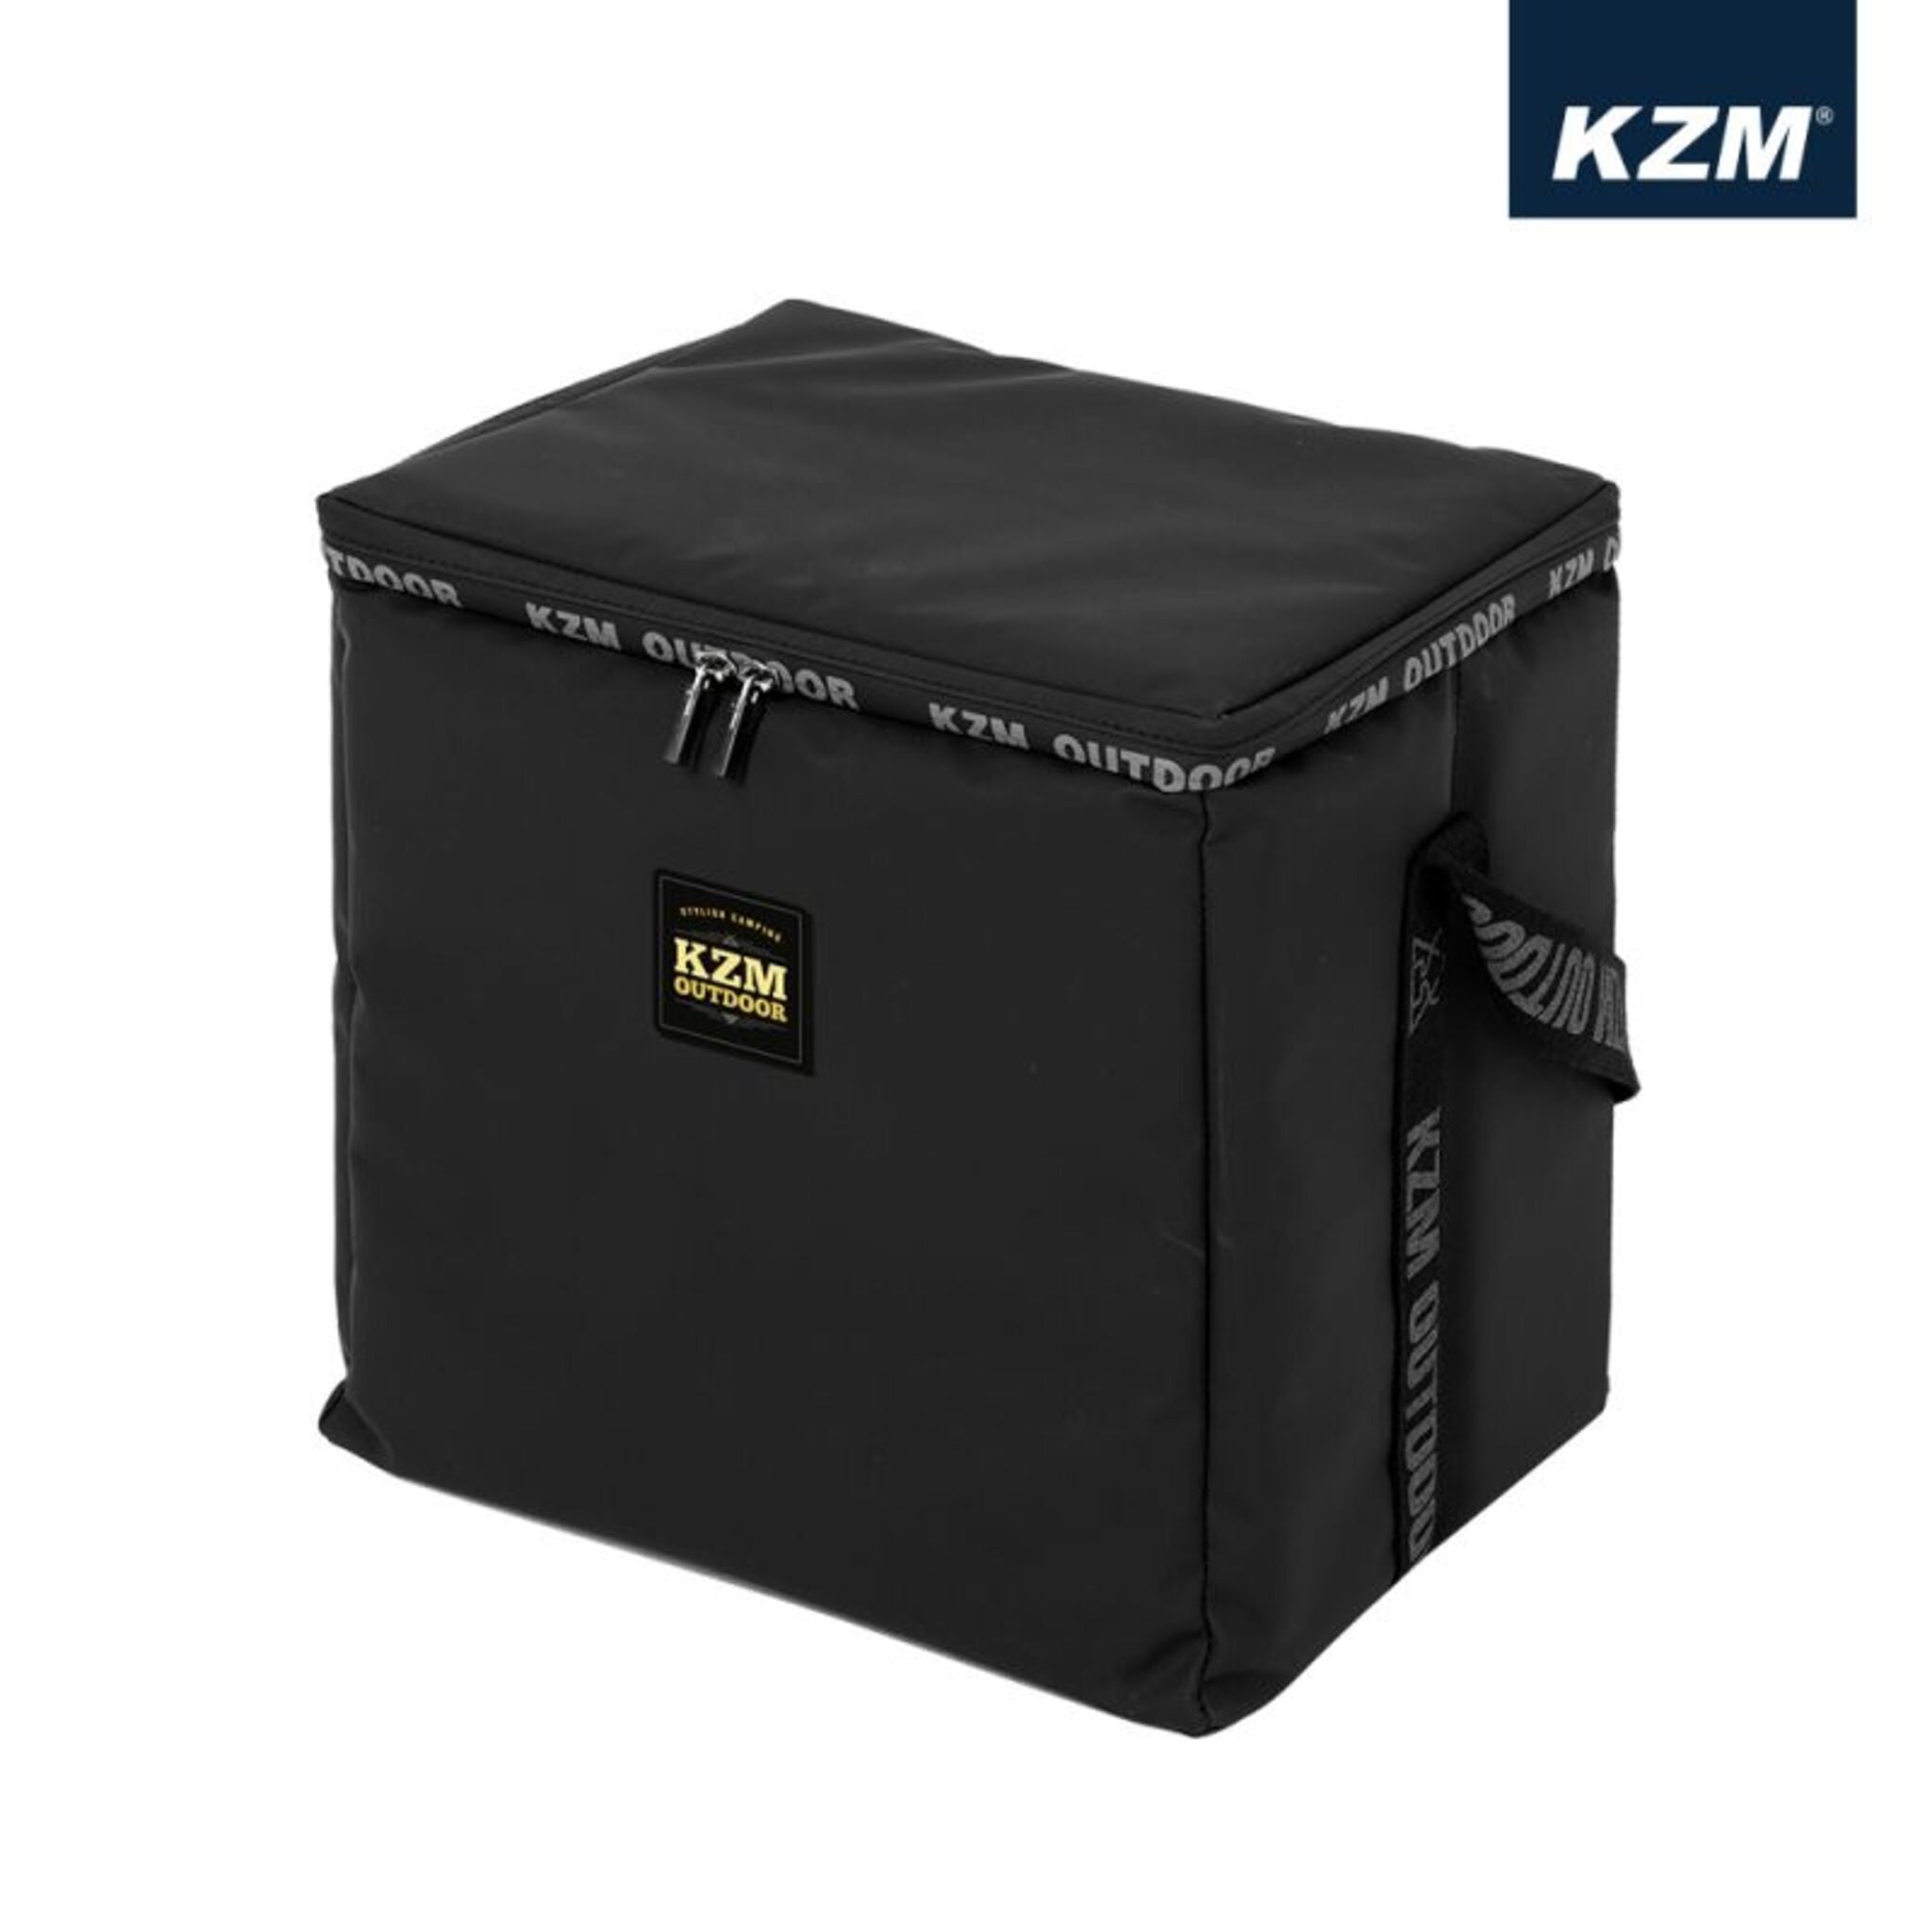 KAZMI KZM 素面個性保冷袋 15L 黑色 K20T3K007